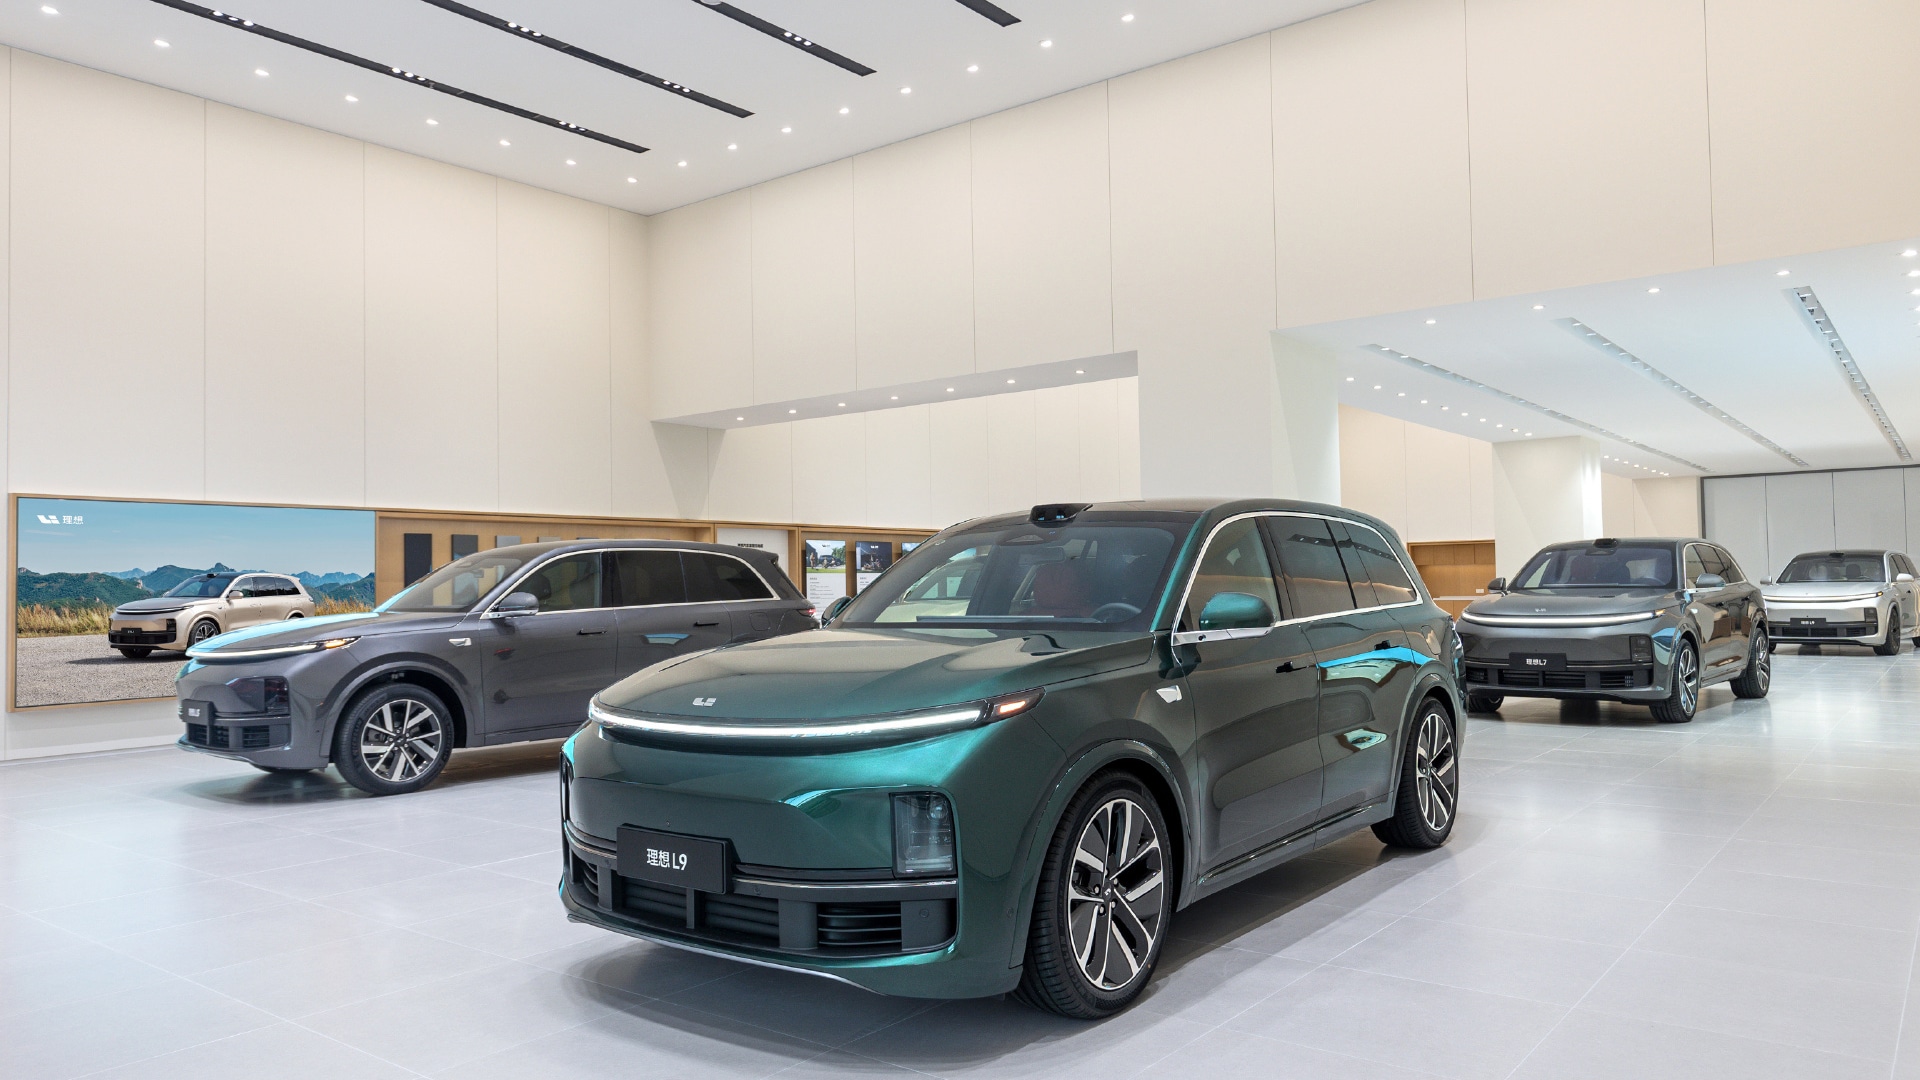 Li Auto Mega MPV unveiled in China, marking brand's transition